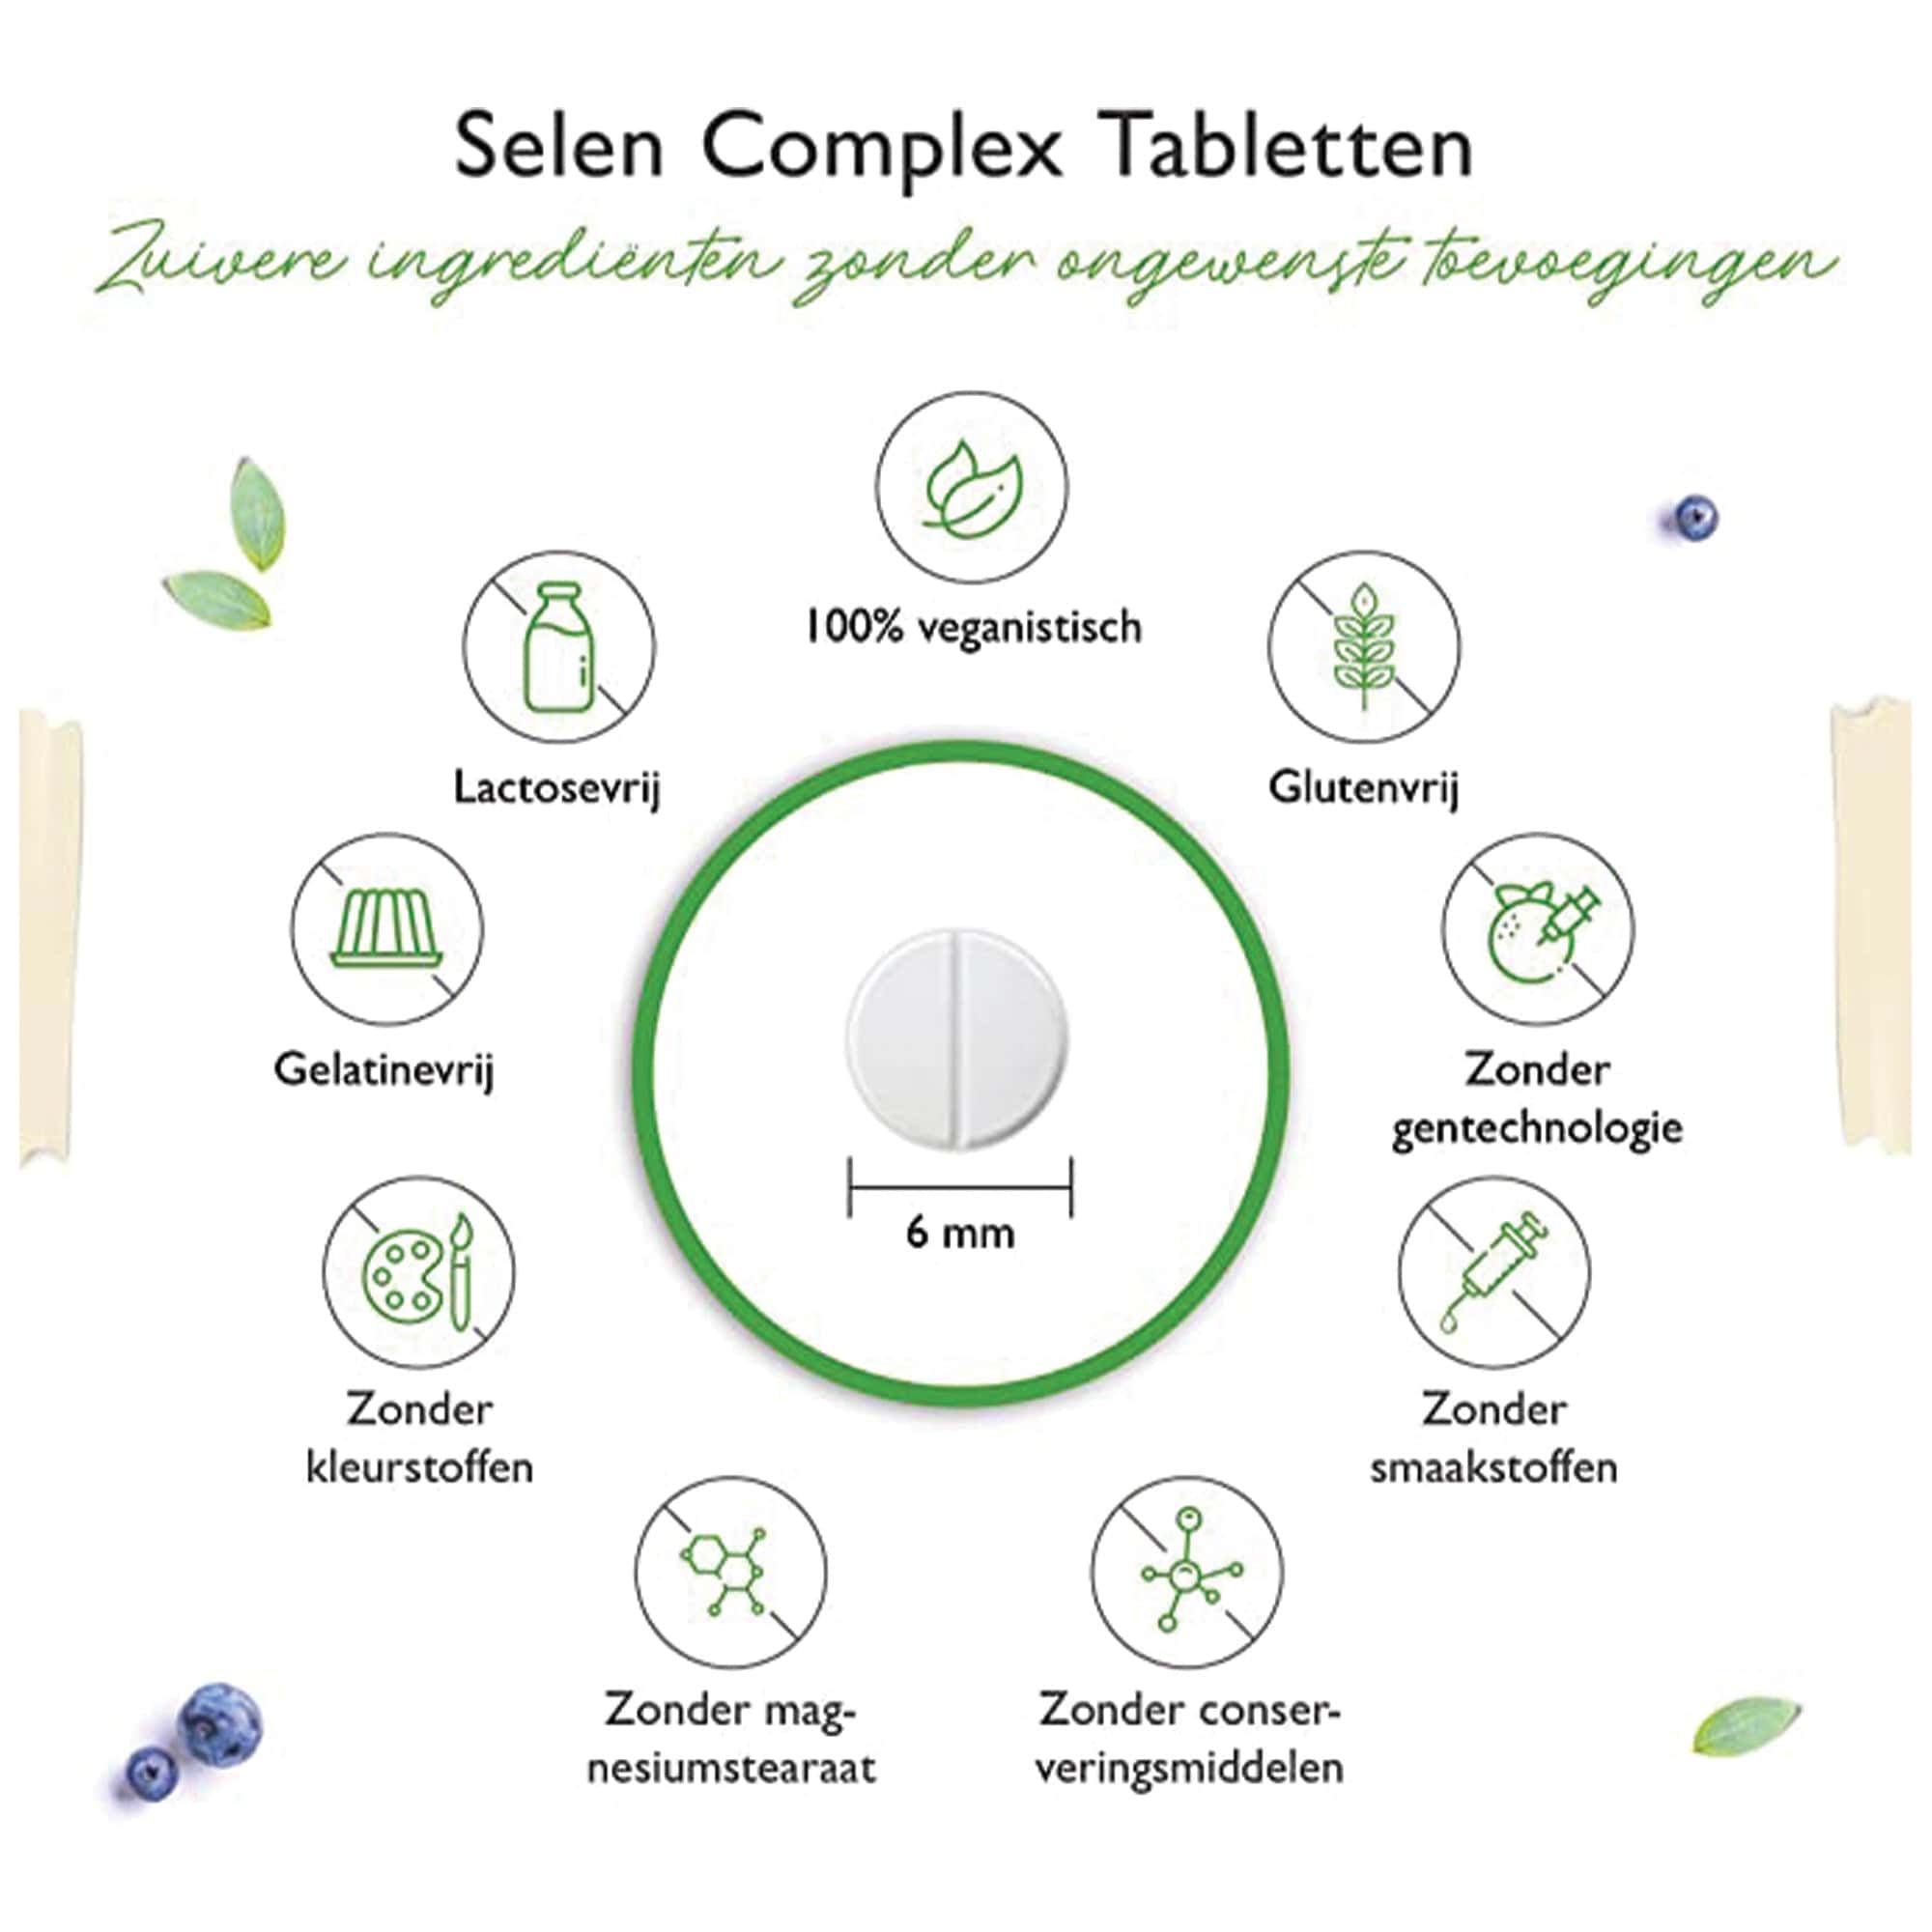 Vit4ever Selenium 3-voudig complex | 365 tabletten met elk 200 µg | Premium: natriumseleniet, L-selenomethionine, seleniumgist | Veganistisch | Hoog gedoseerd